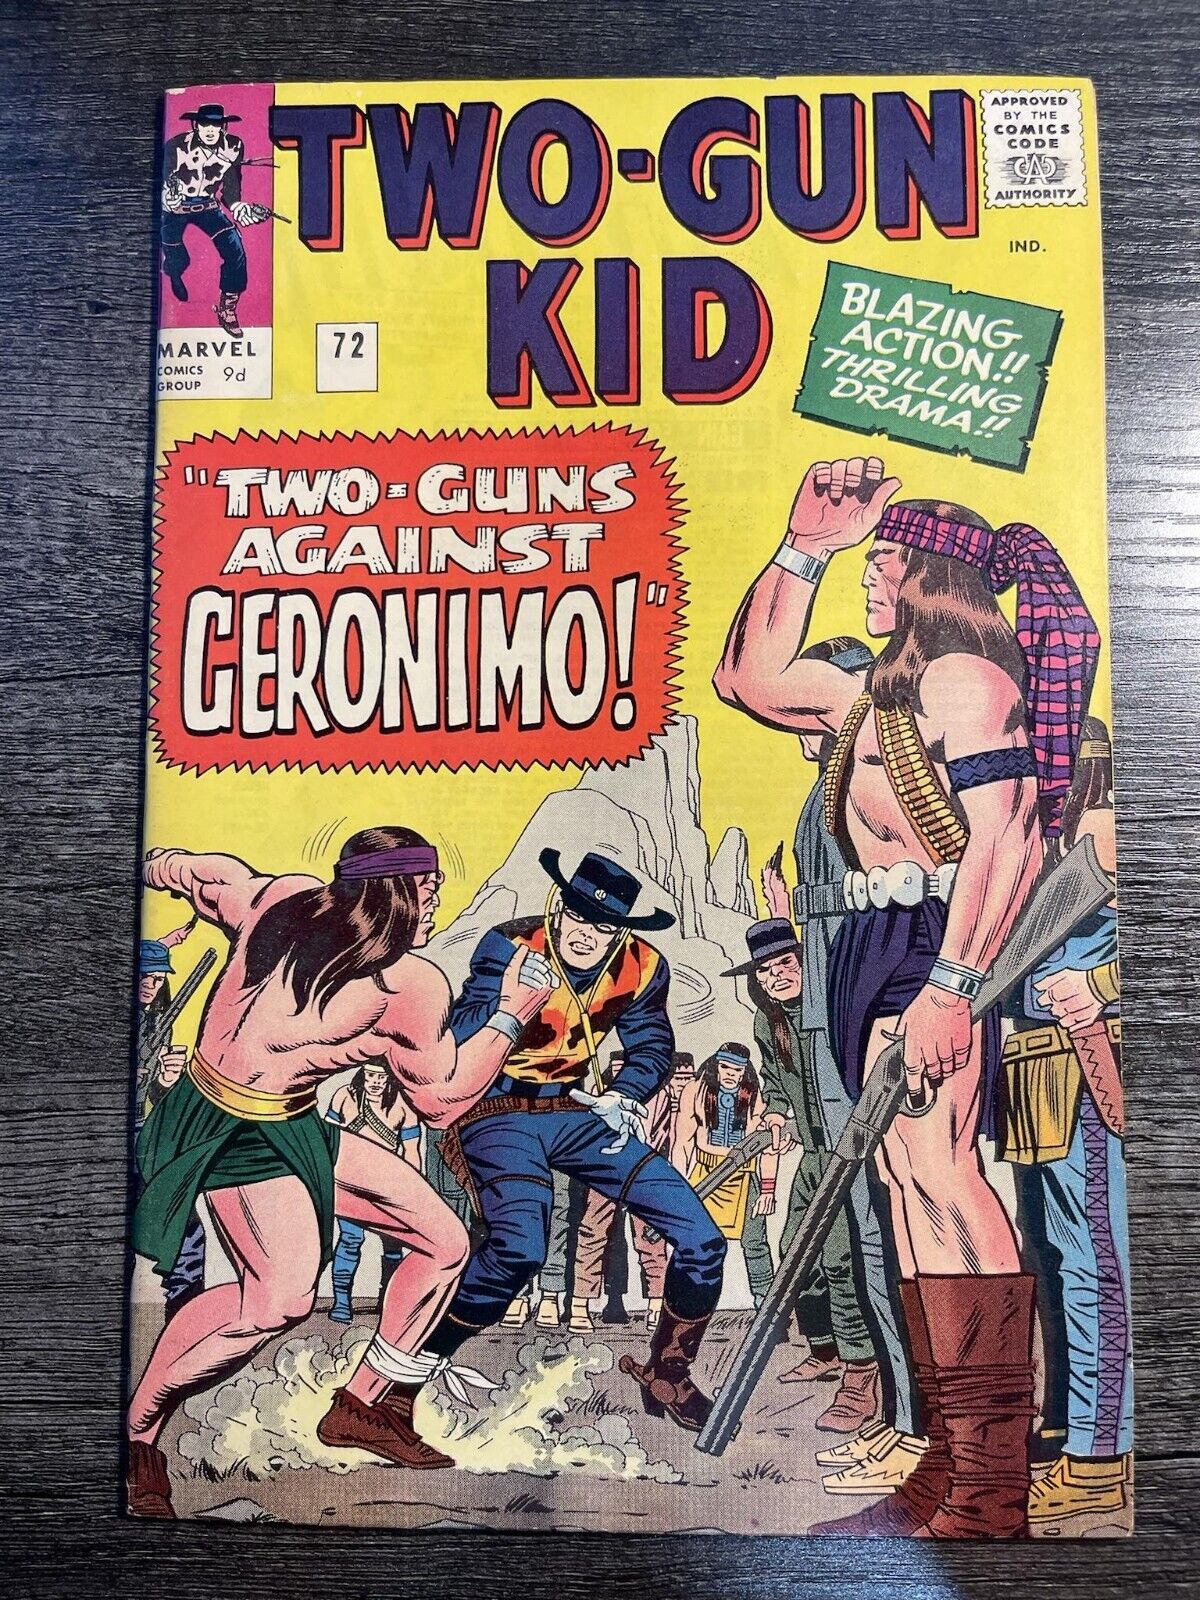 Two Gun Kid #72 Marvel Comics Group November 1964 FN/VF Pence Price